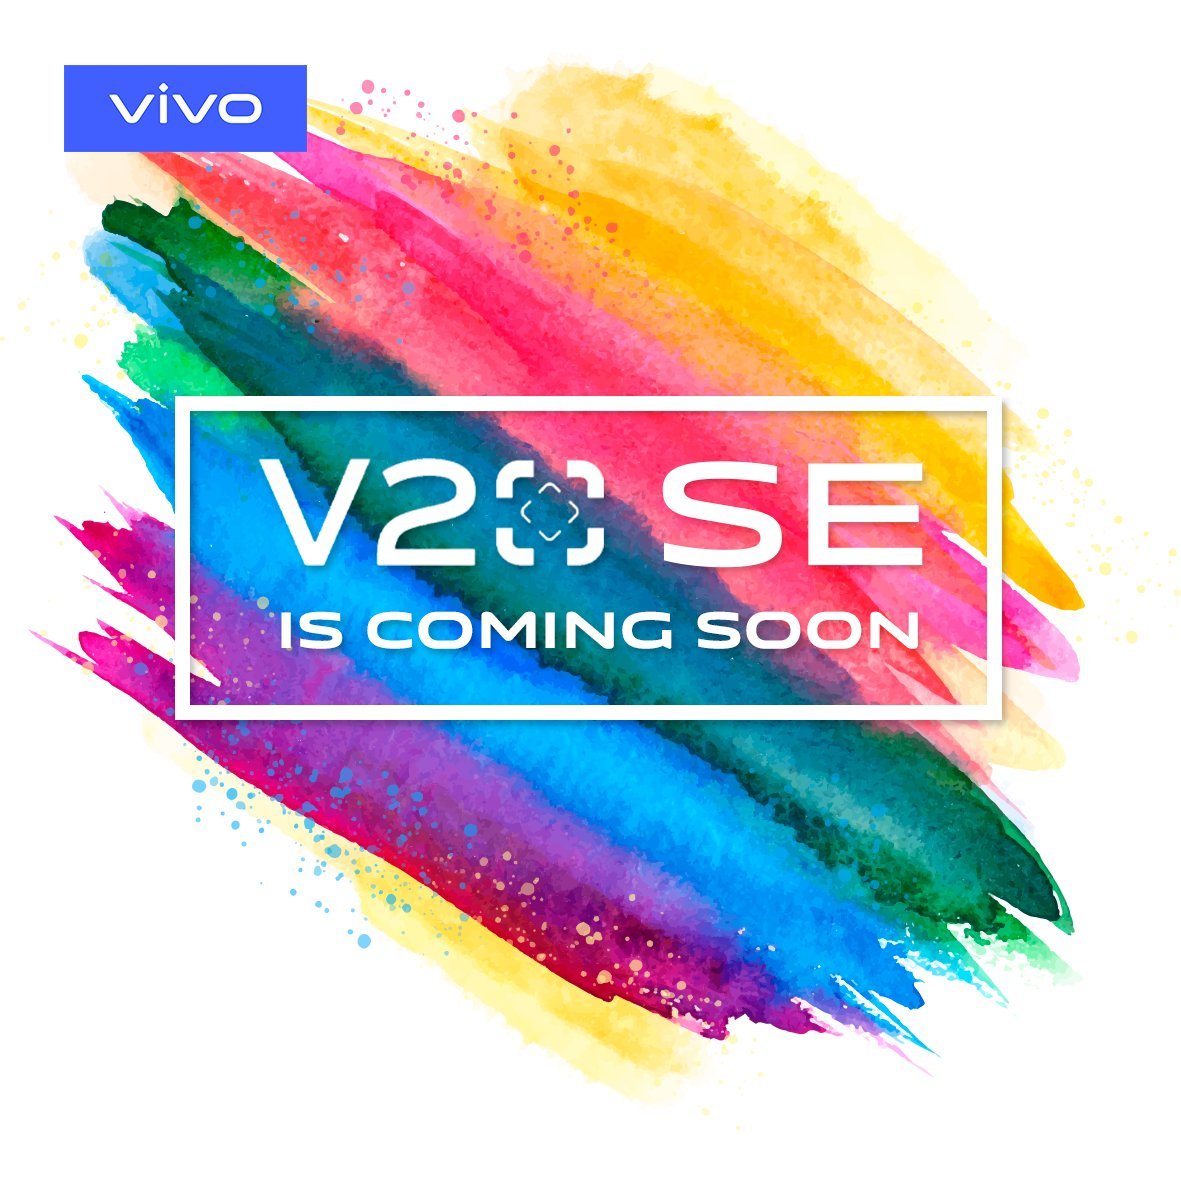 Vivo V20 SE coming soon